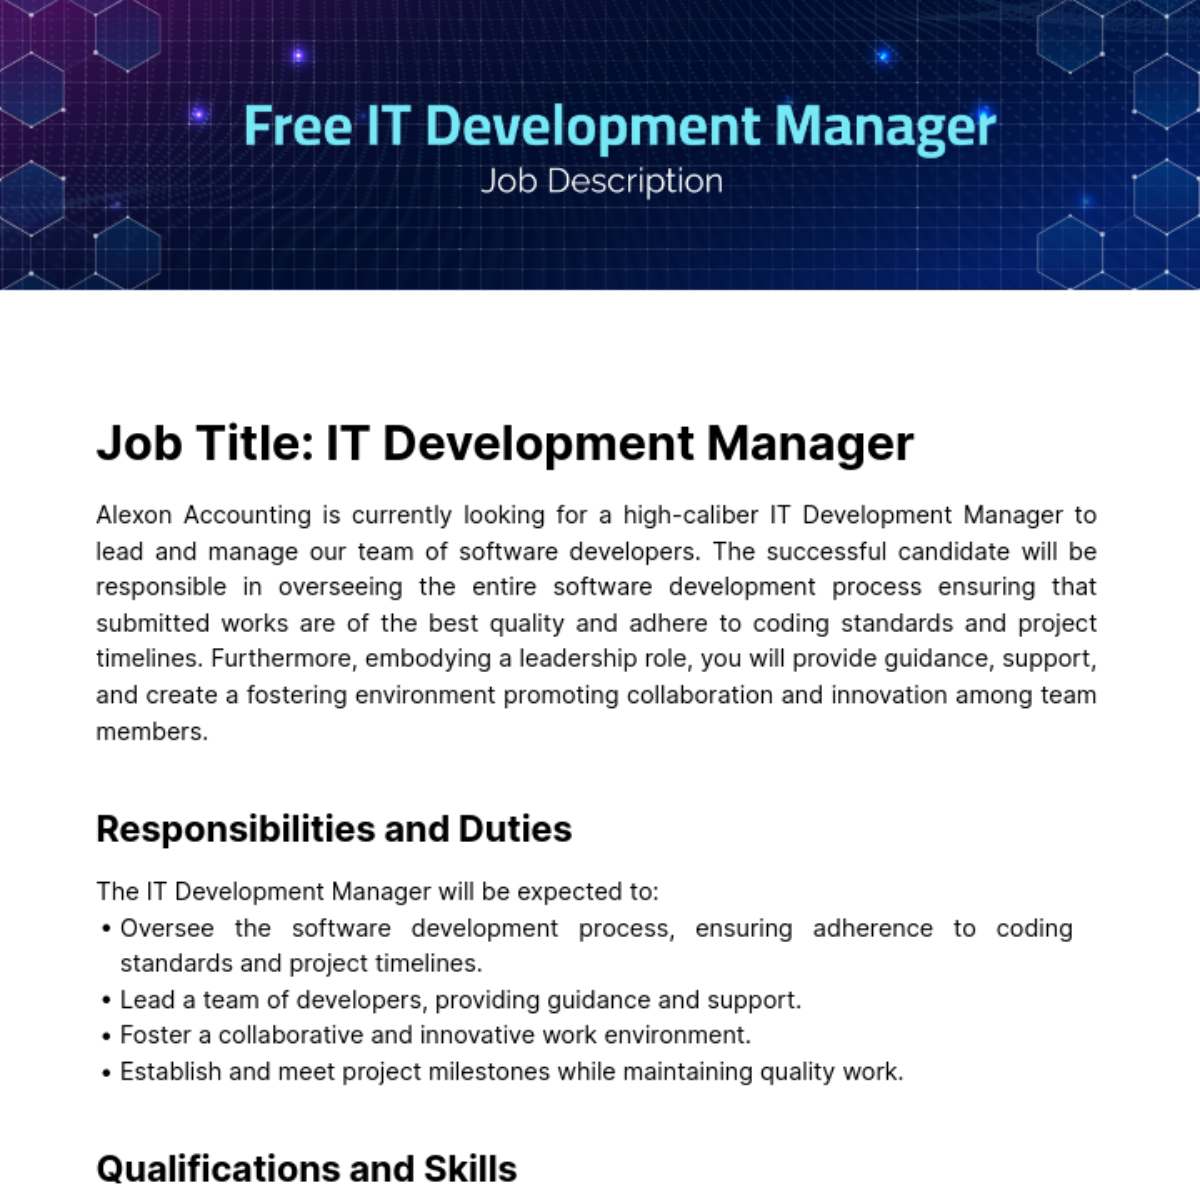 Free IT Development Manager Job Description Template